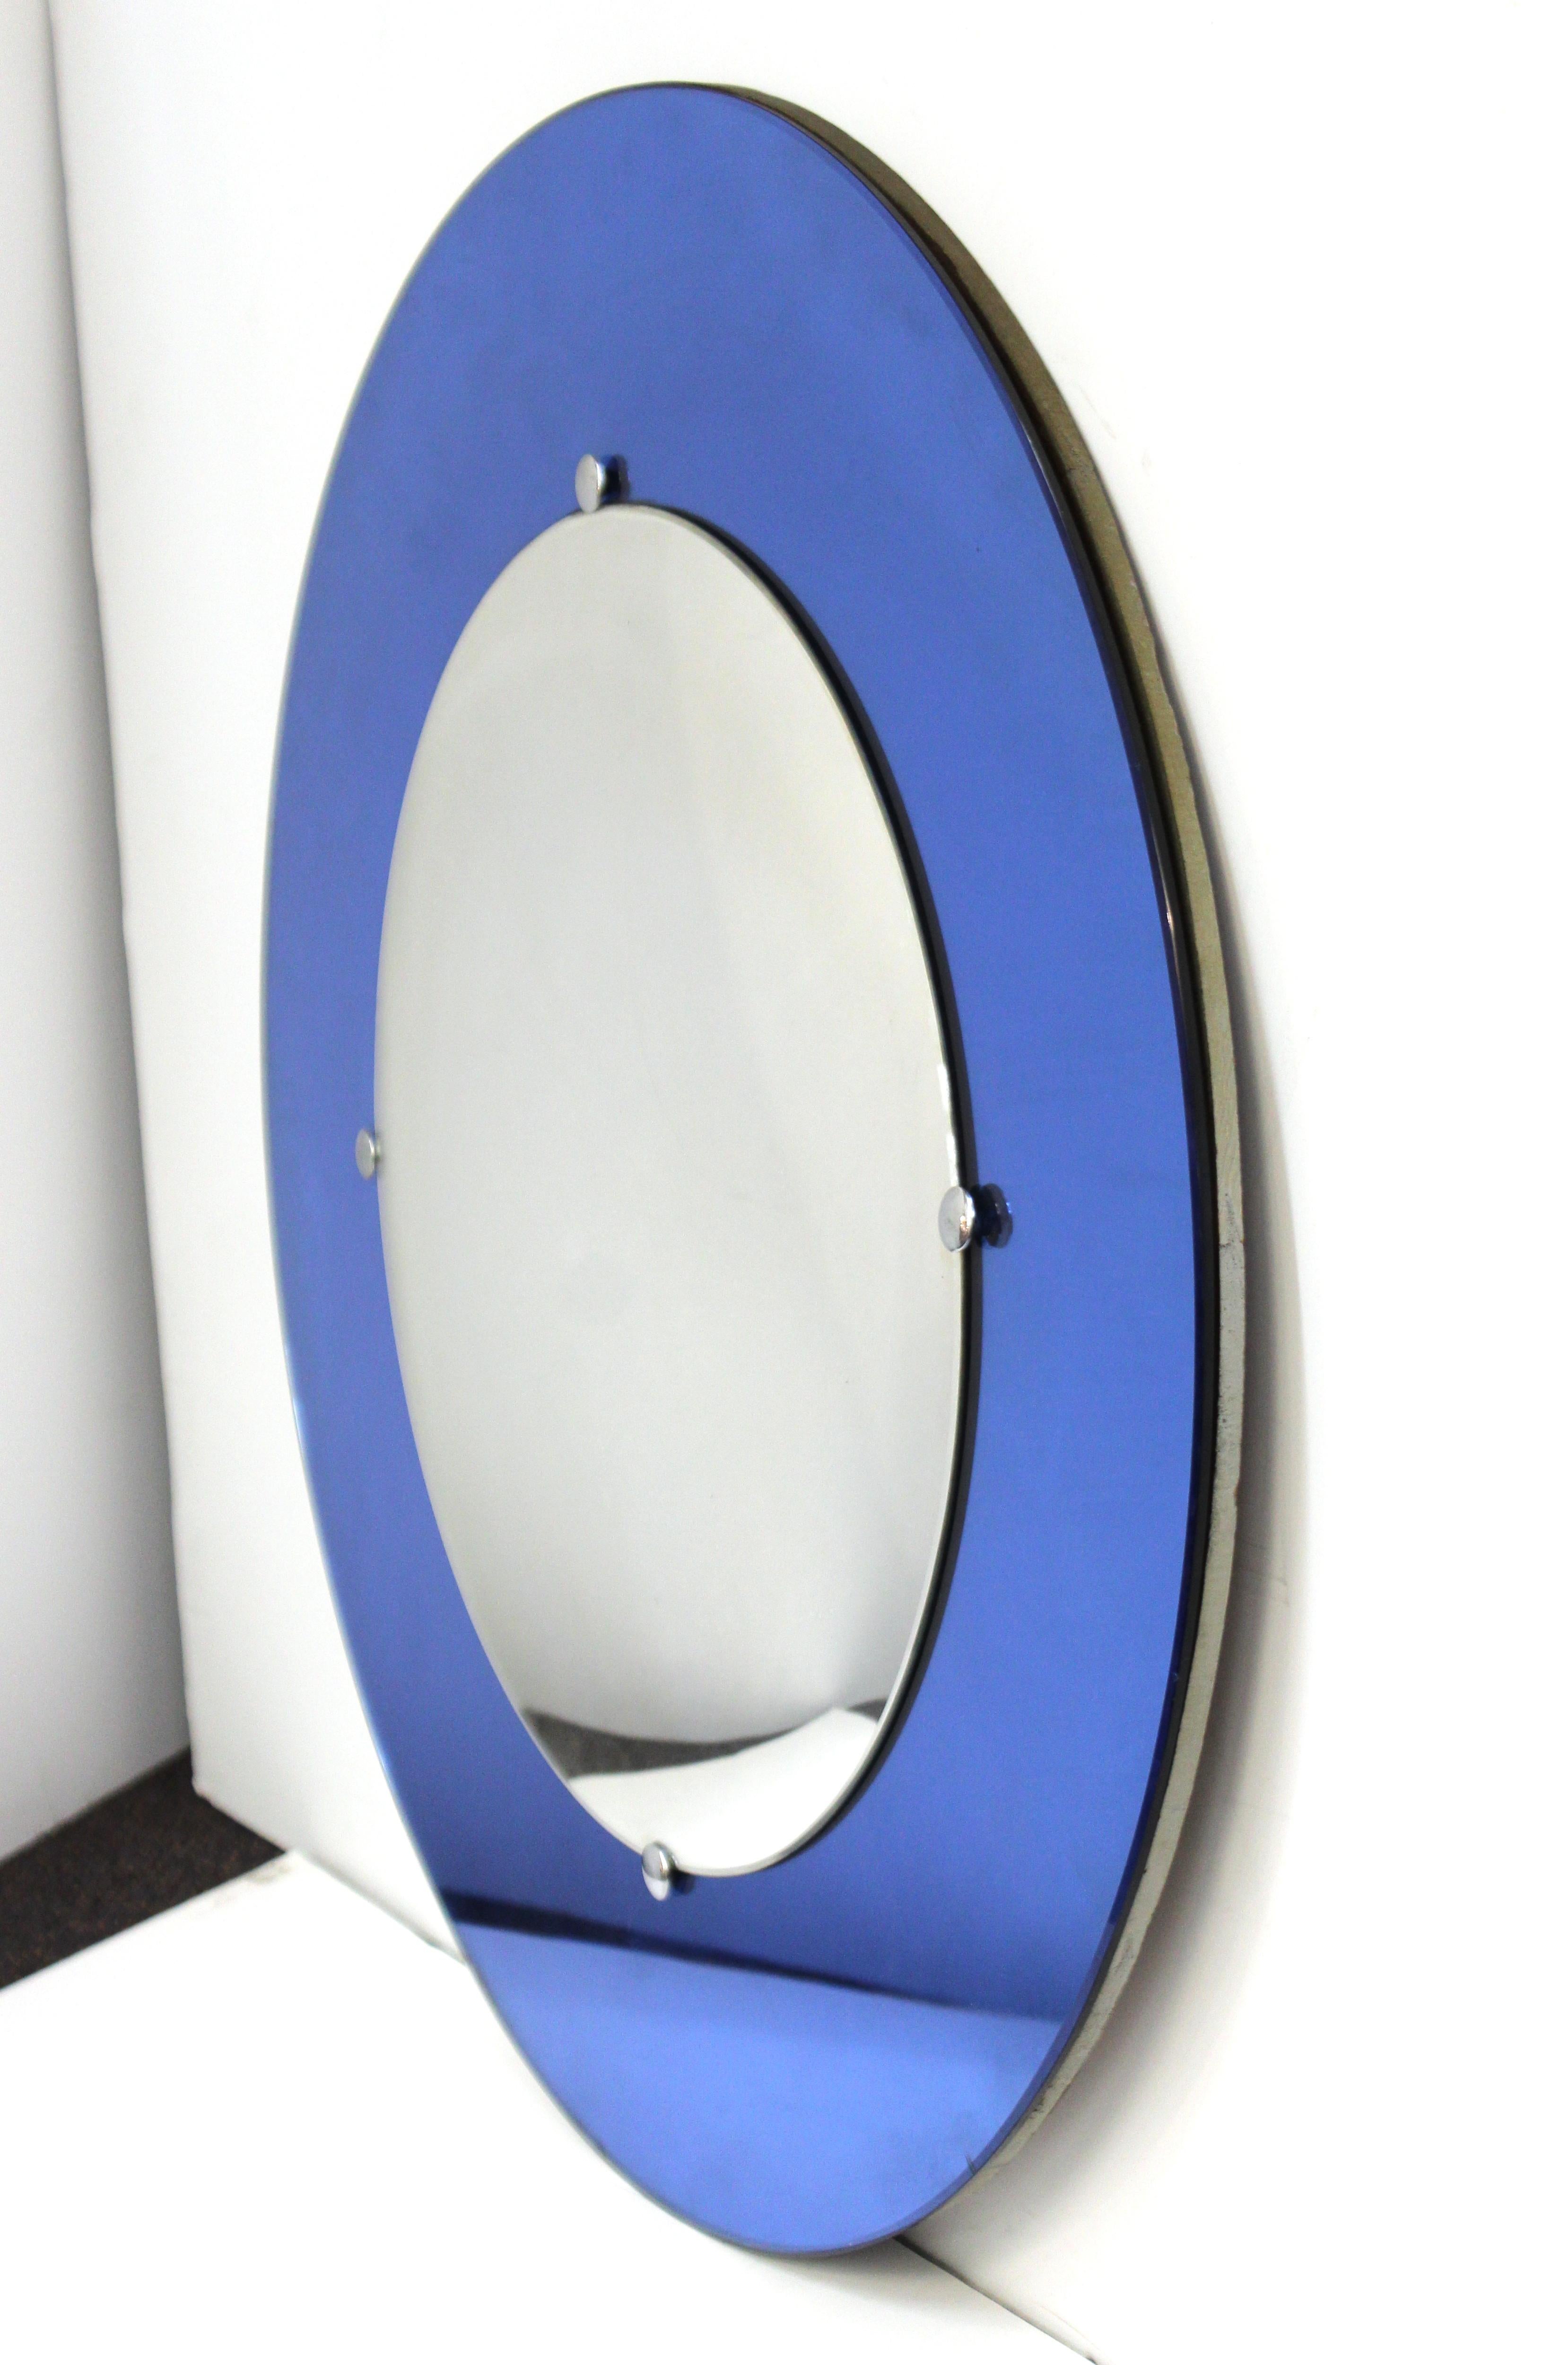 Mid-20th Century Art Deco Convex Circular Mirror with Blue Border